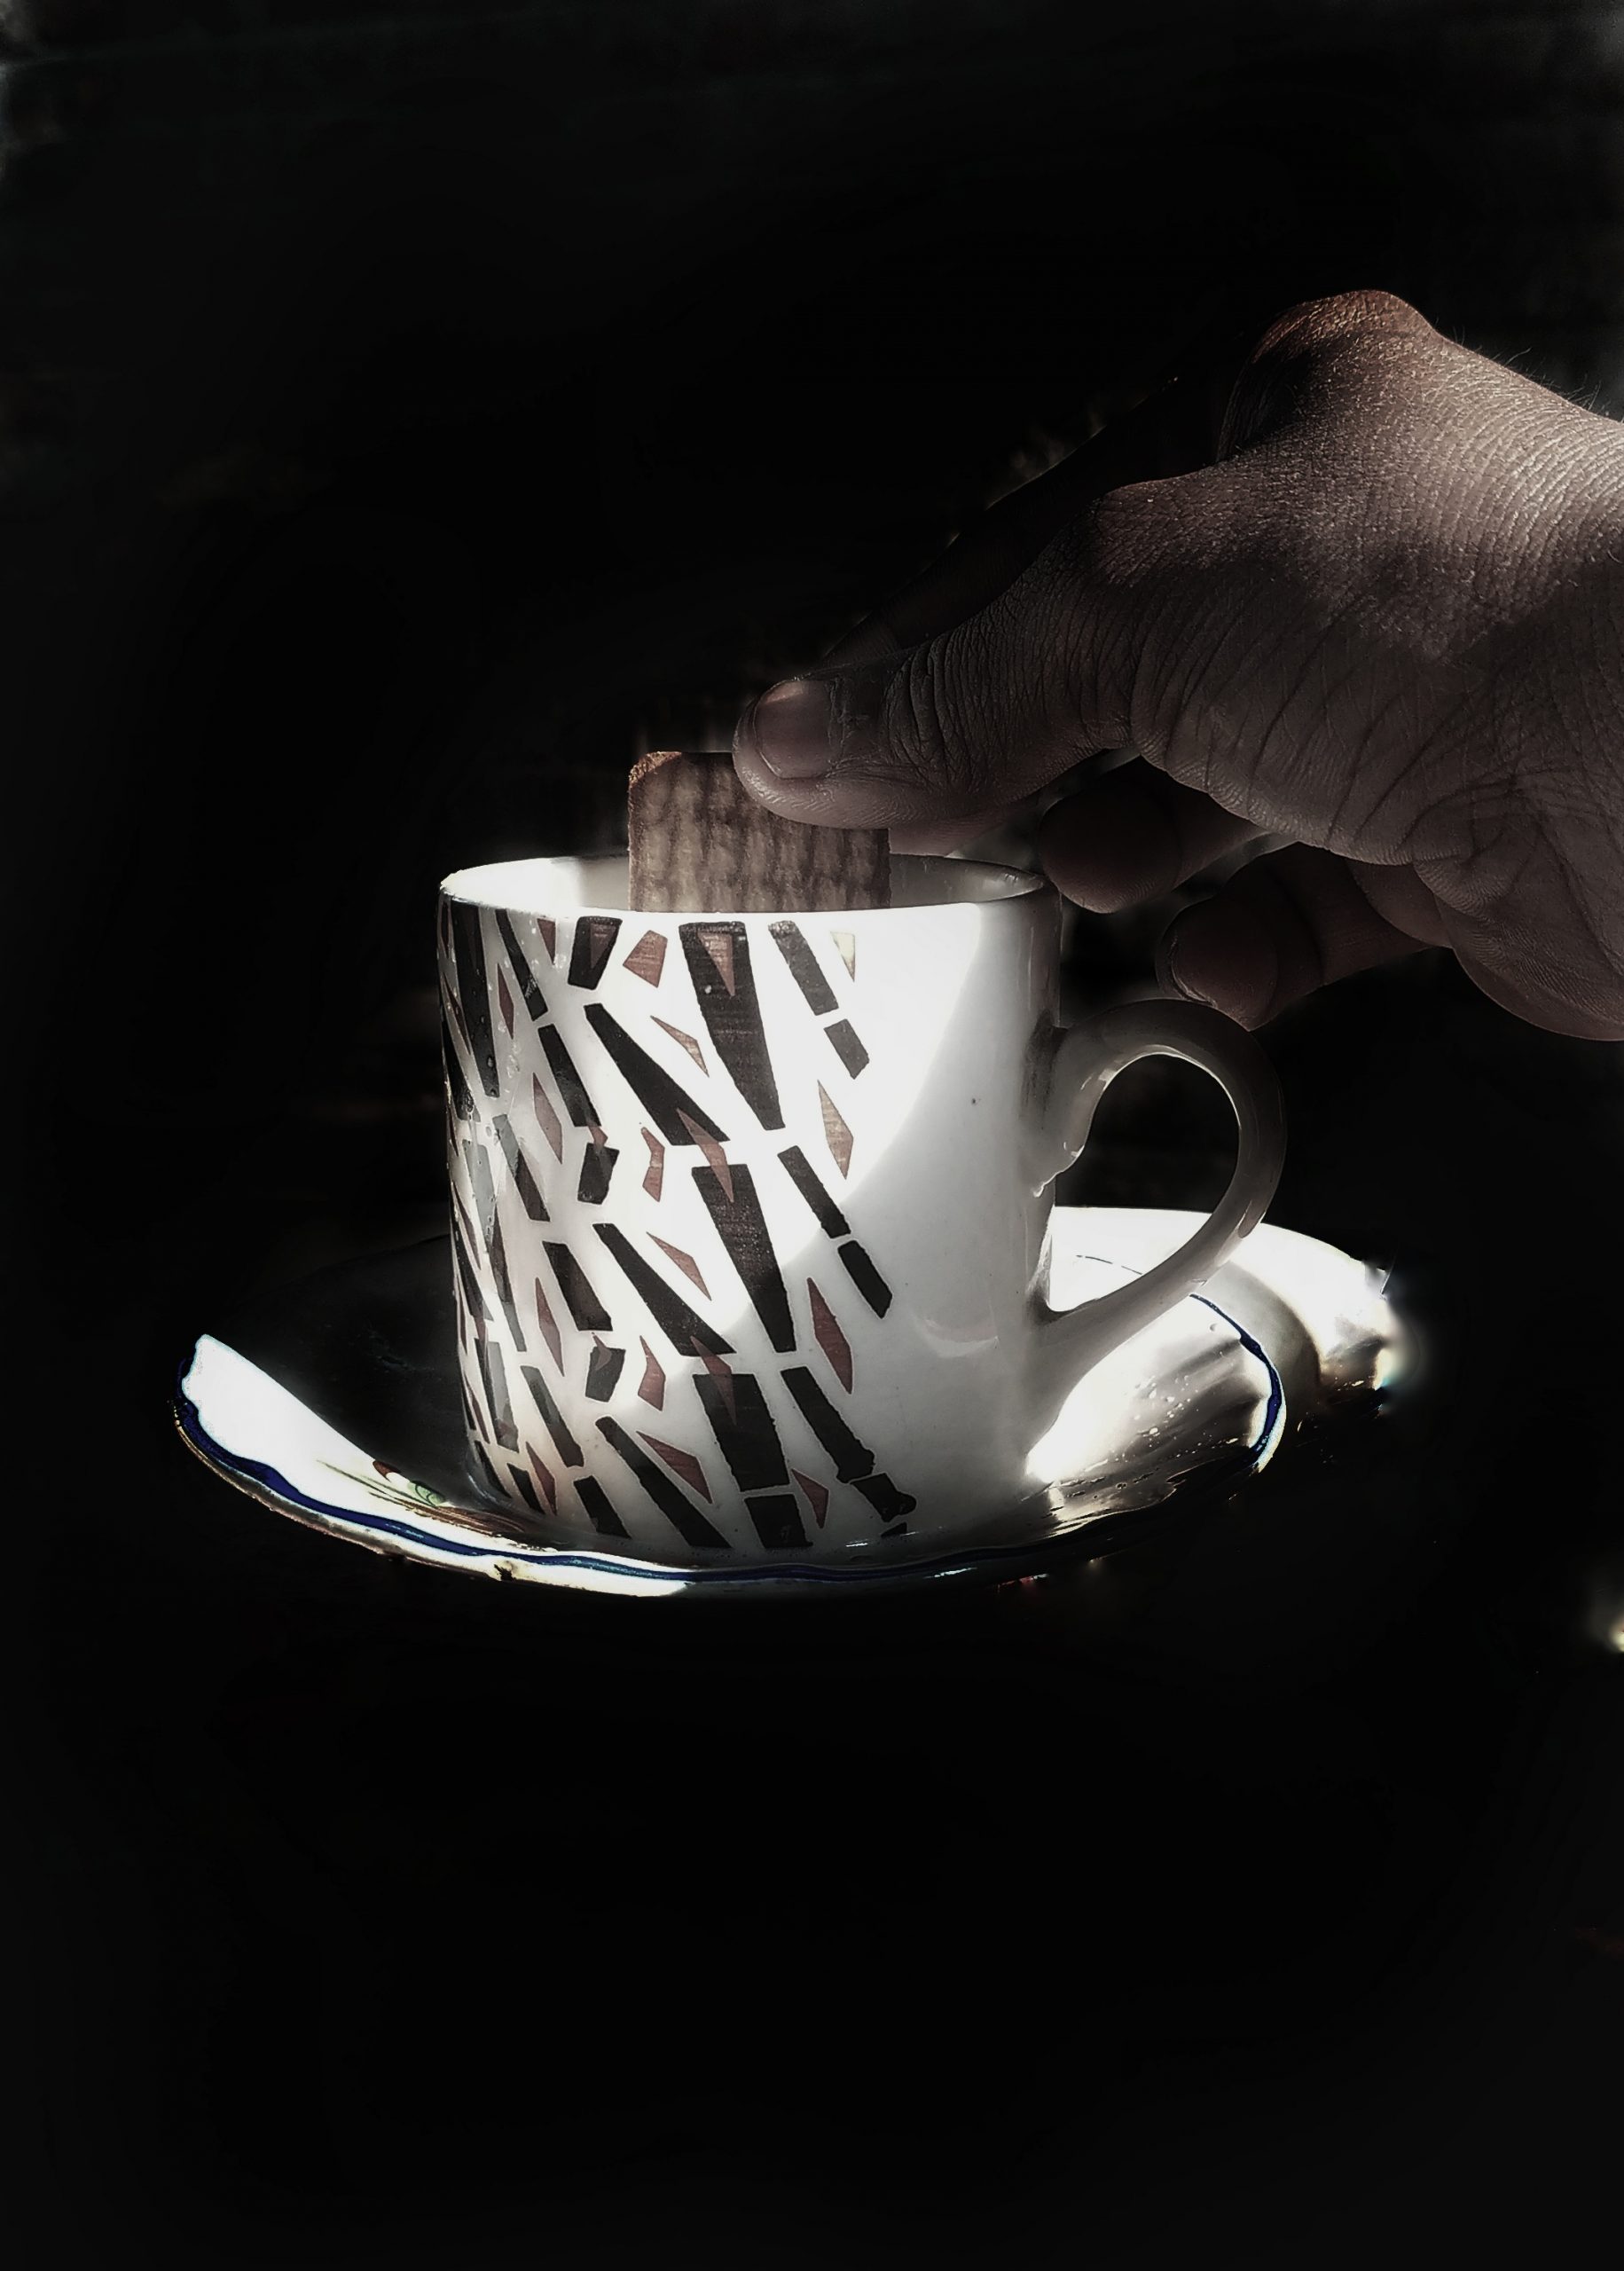 A tea cup